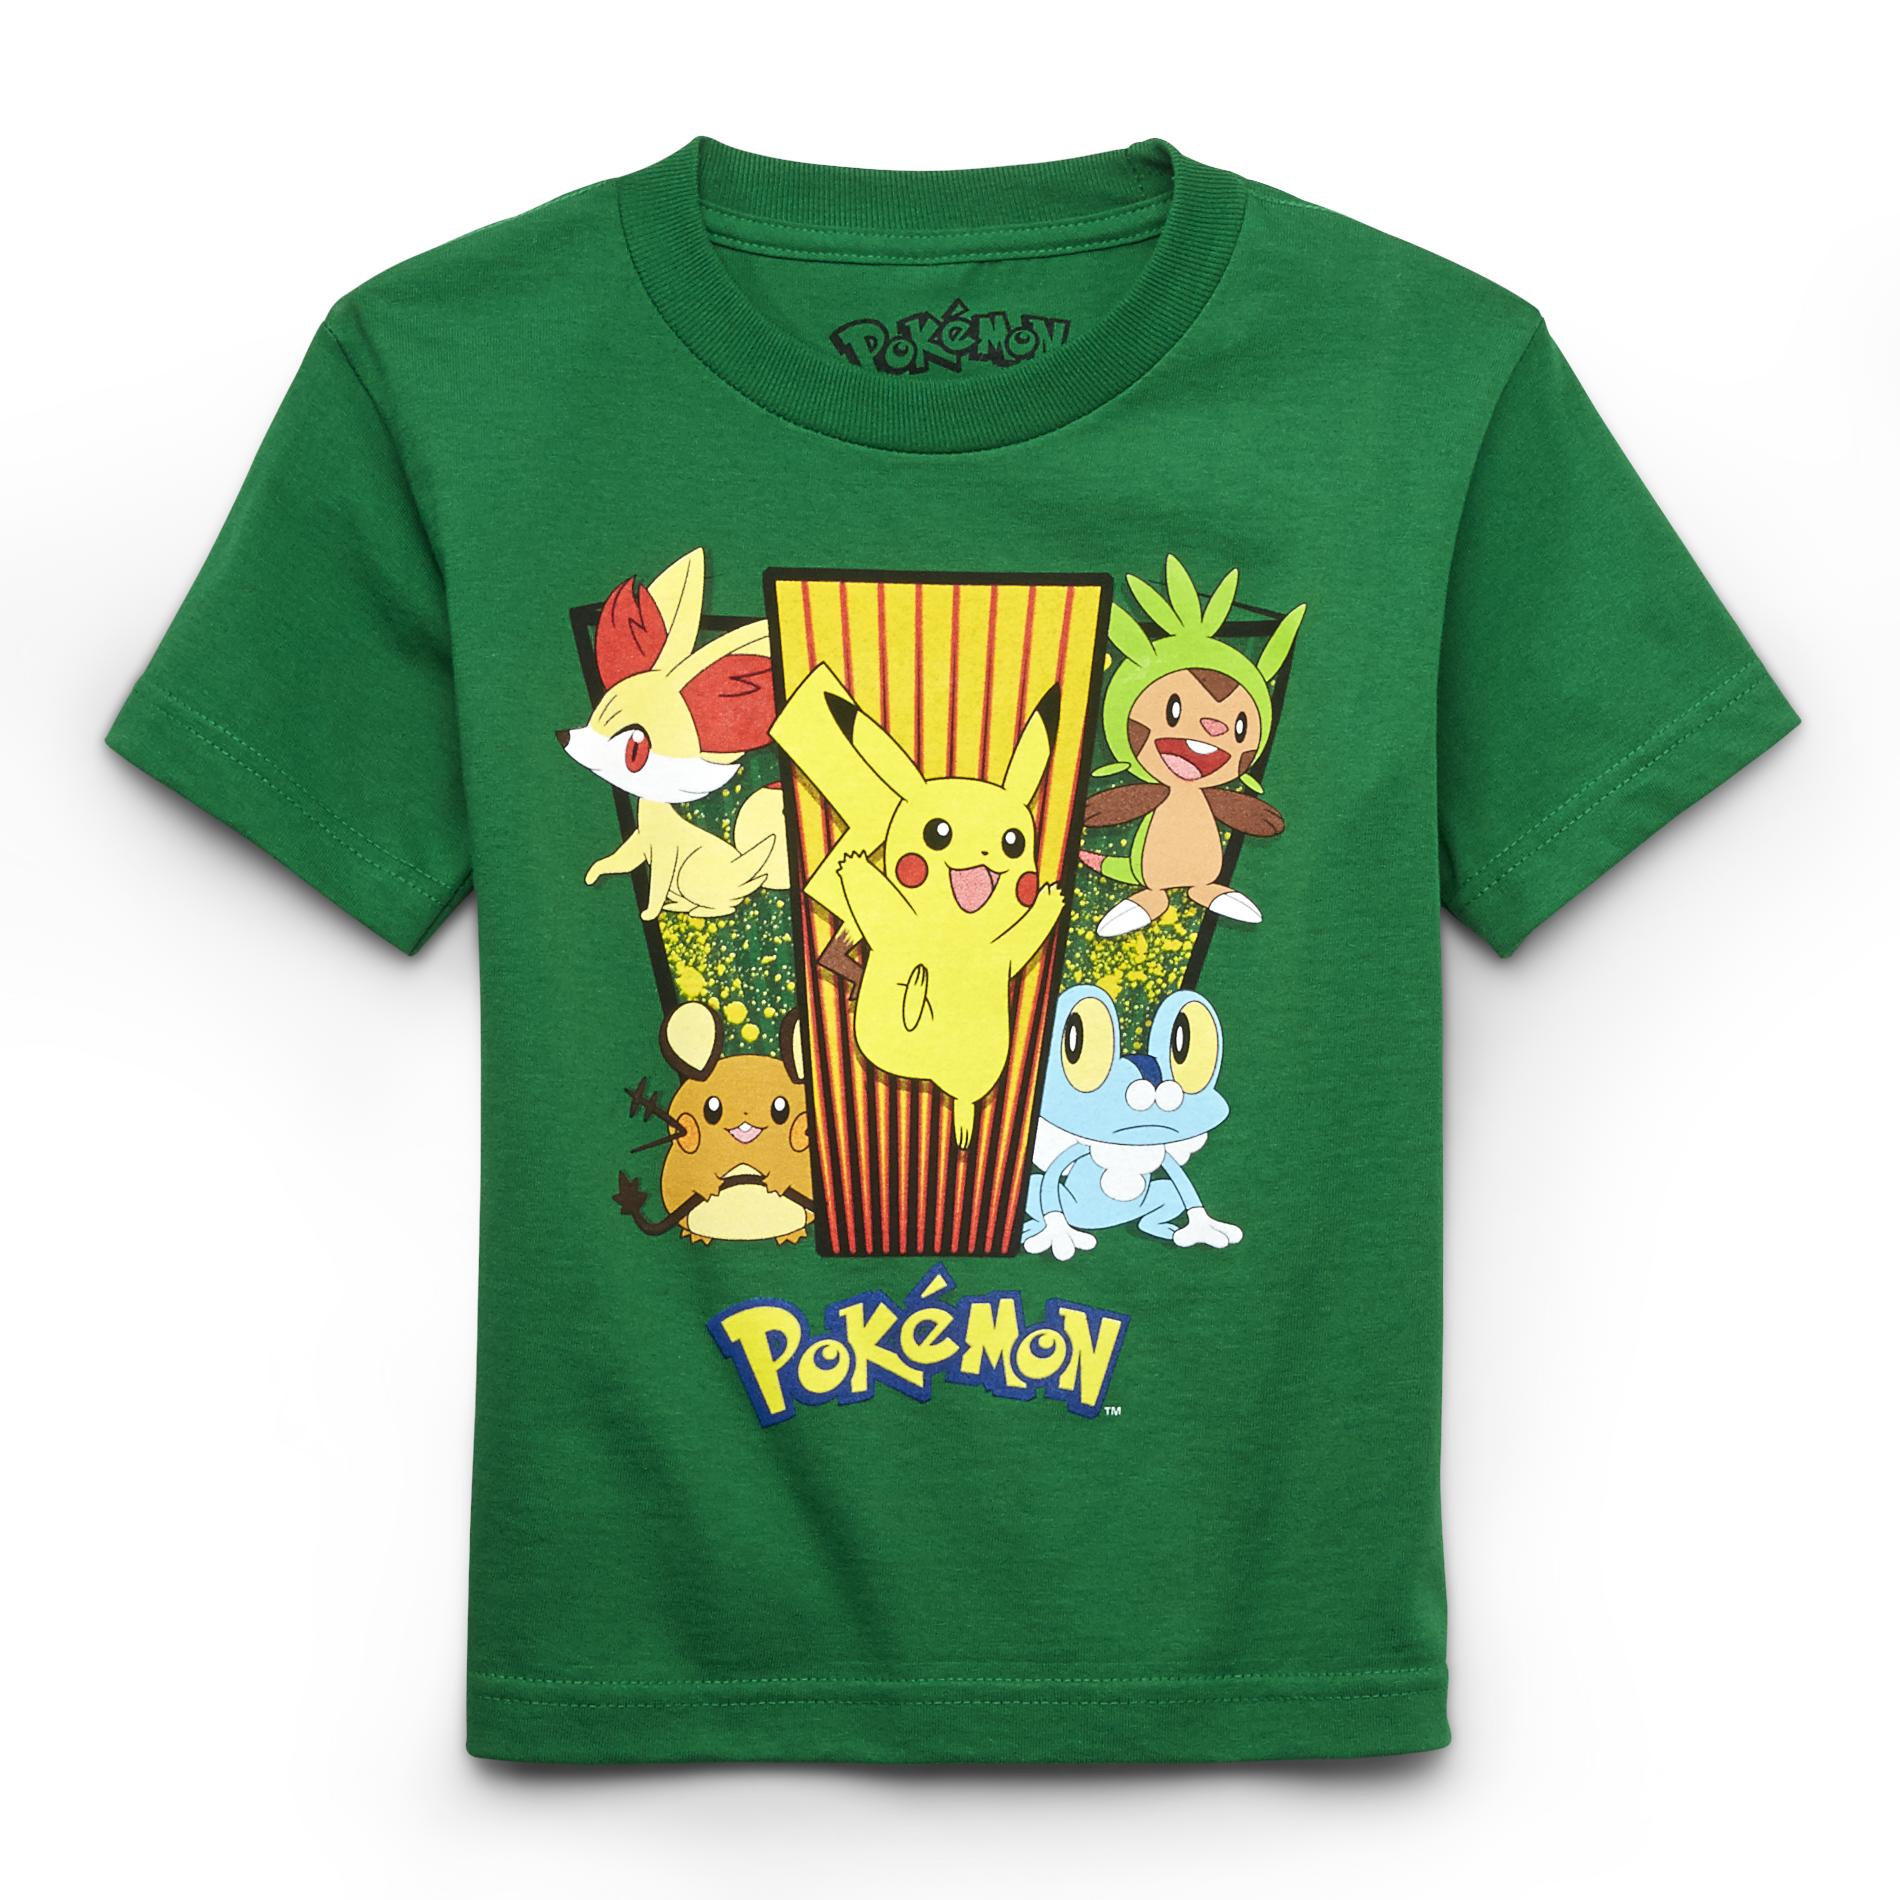 Nintendo Boy's Graphic T-Shirt - Pokemon